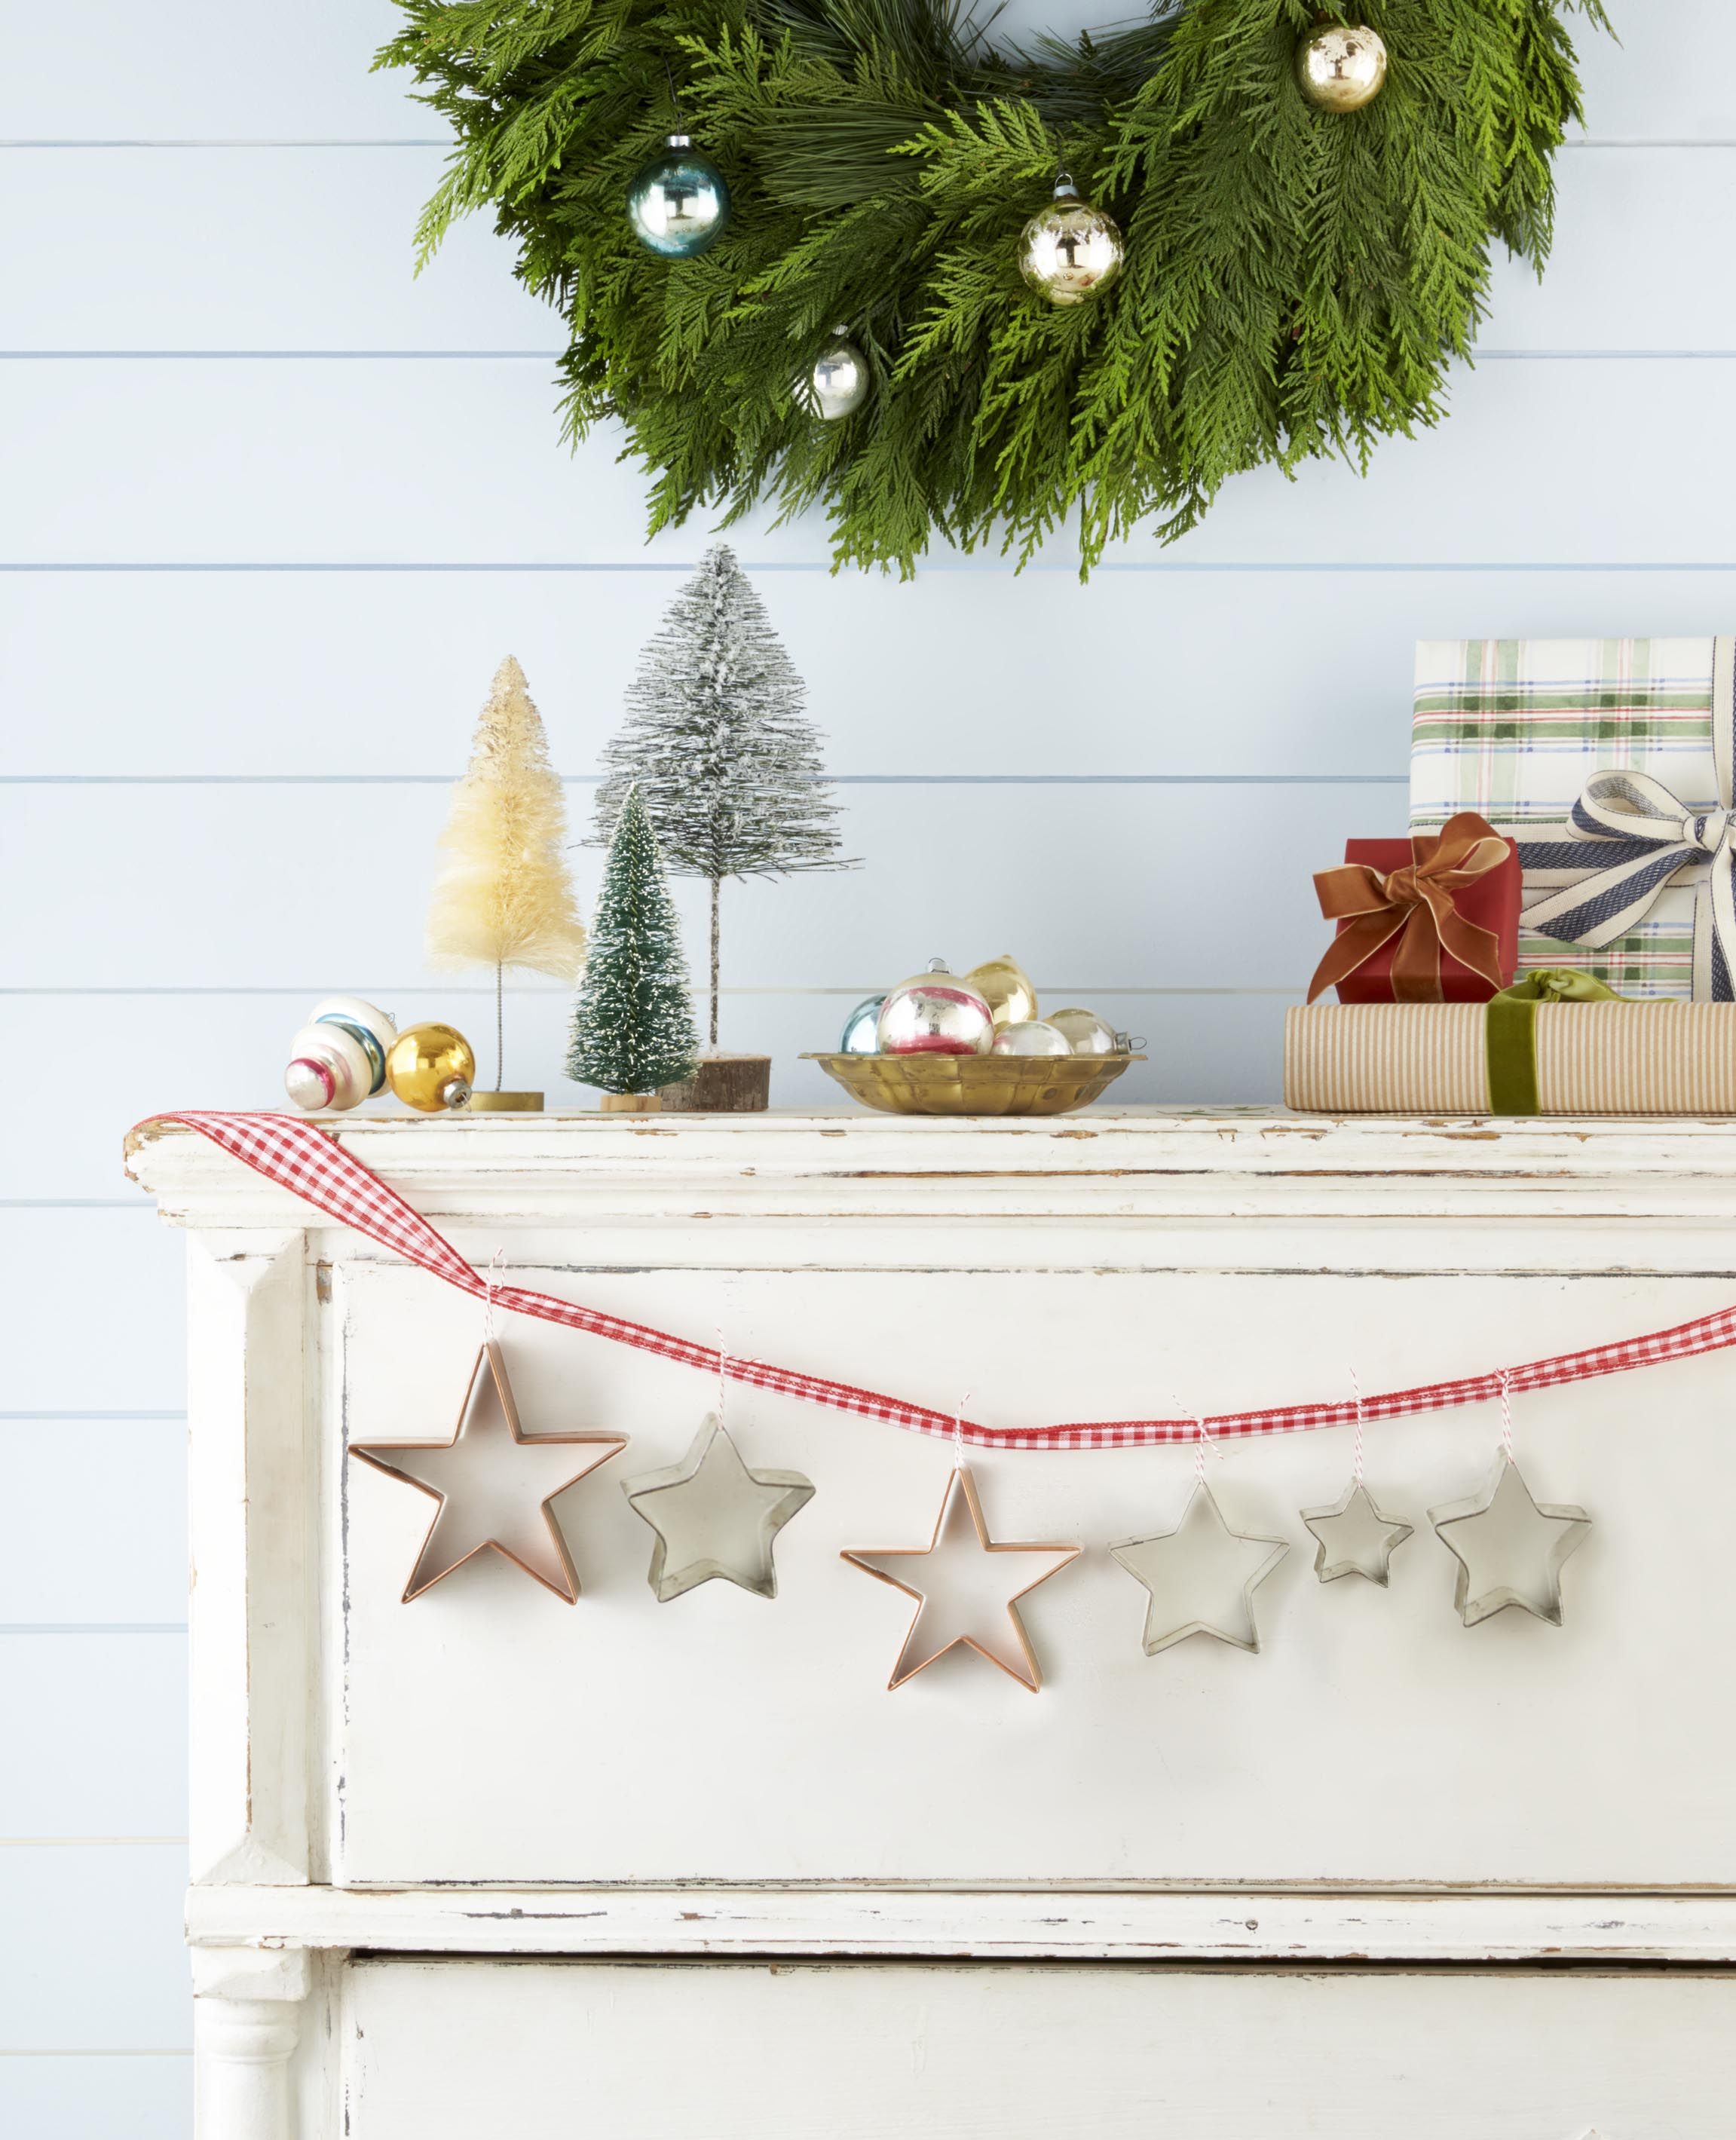 10 Creative Garage Door Christmas Decoration Ideas to Make Your ...